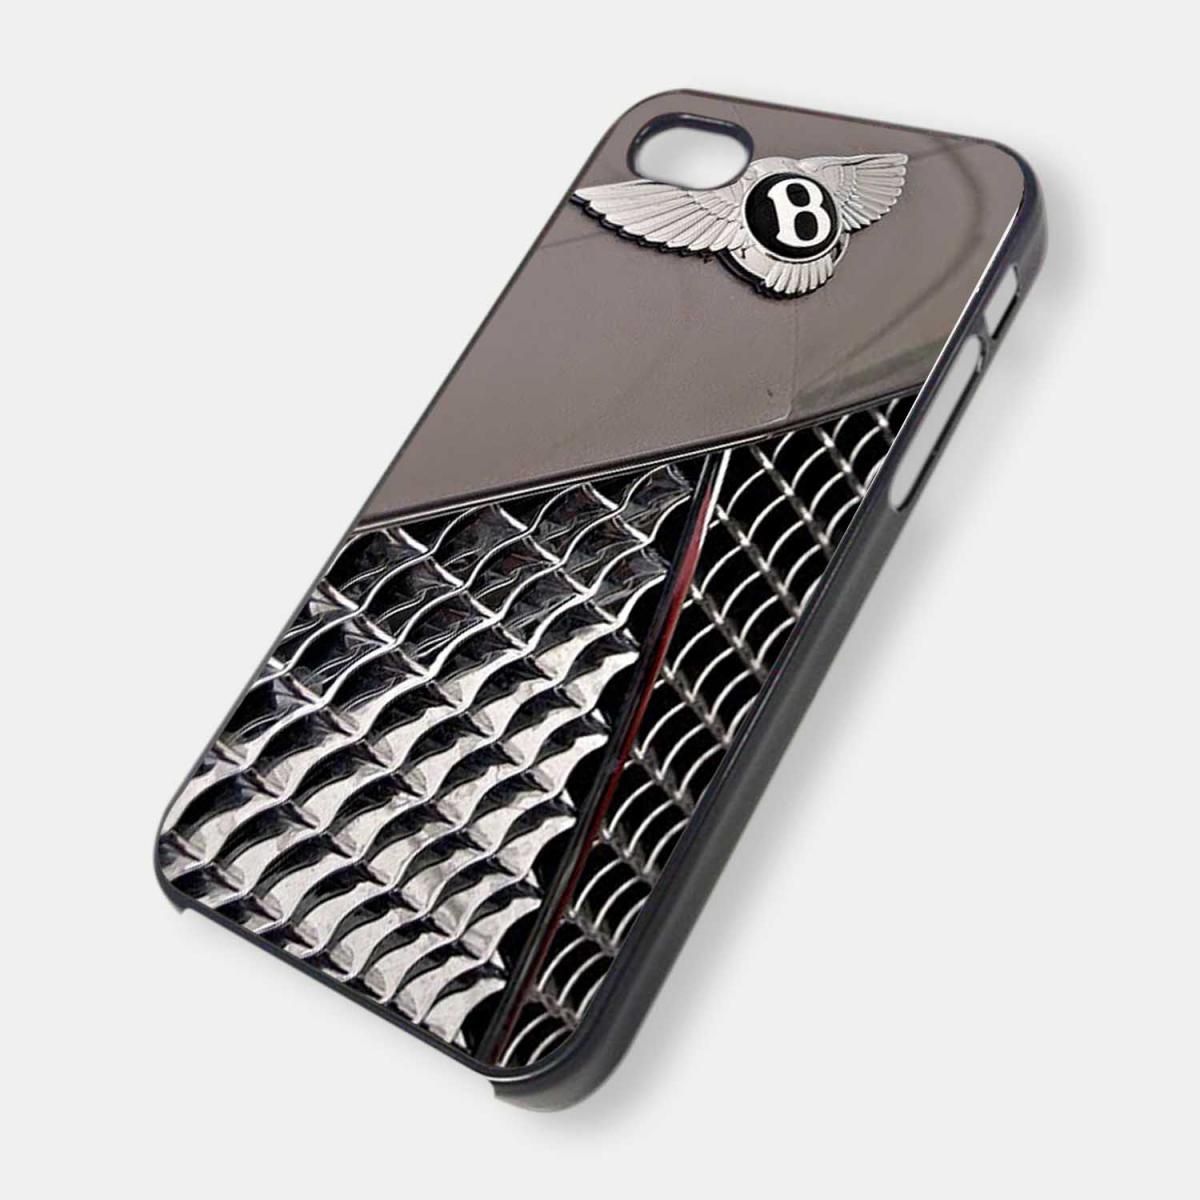 Bentley Car Special Design Iphone 5 Black Case Cover